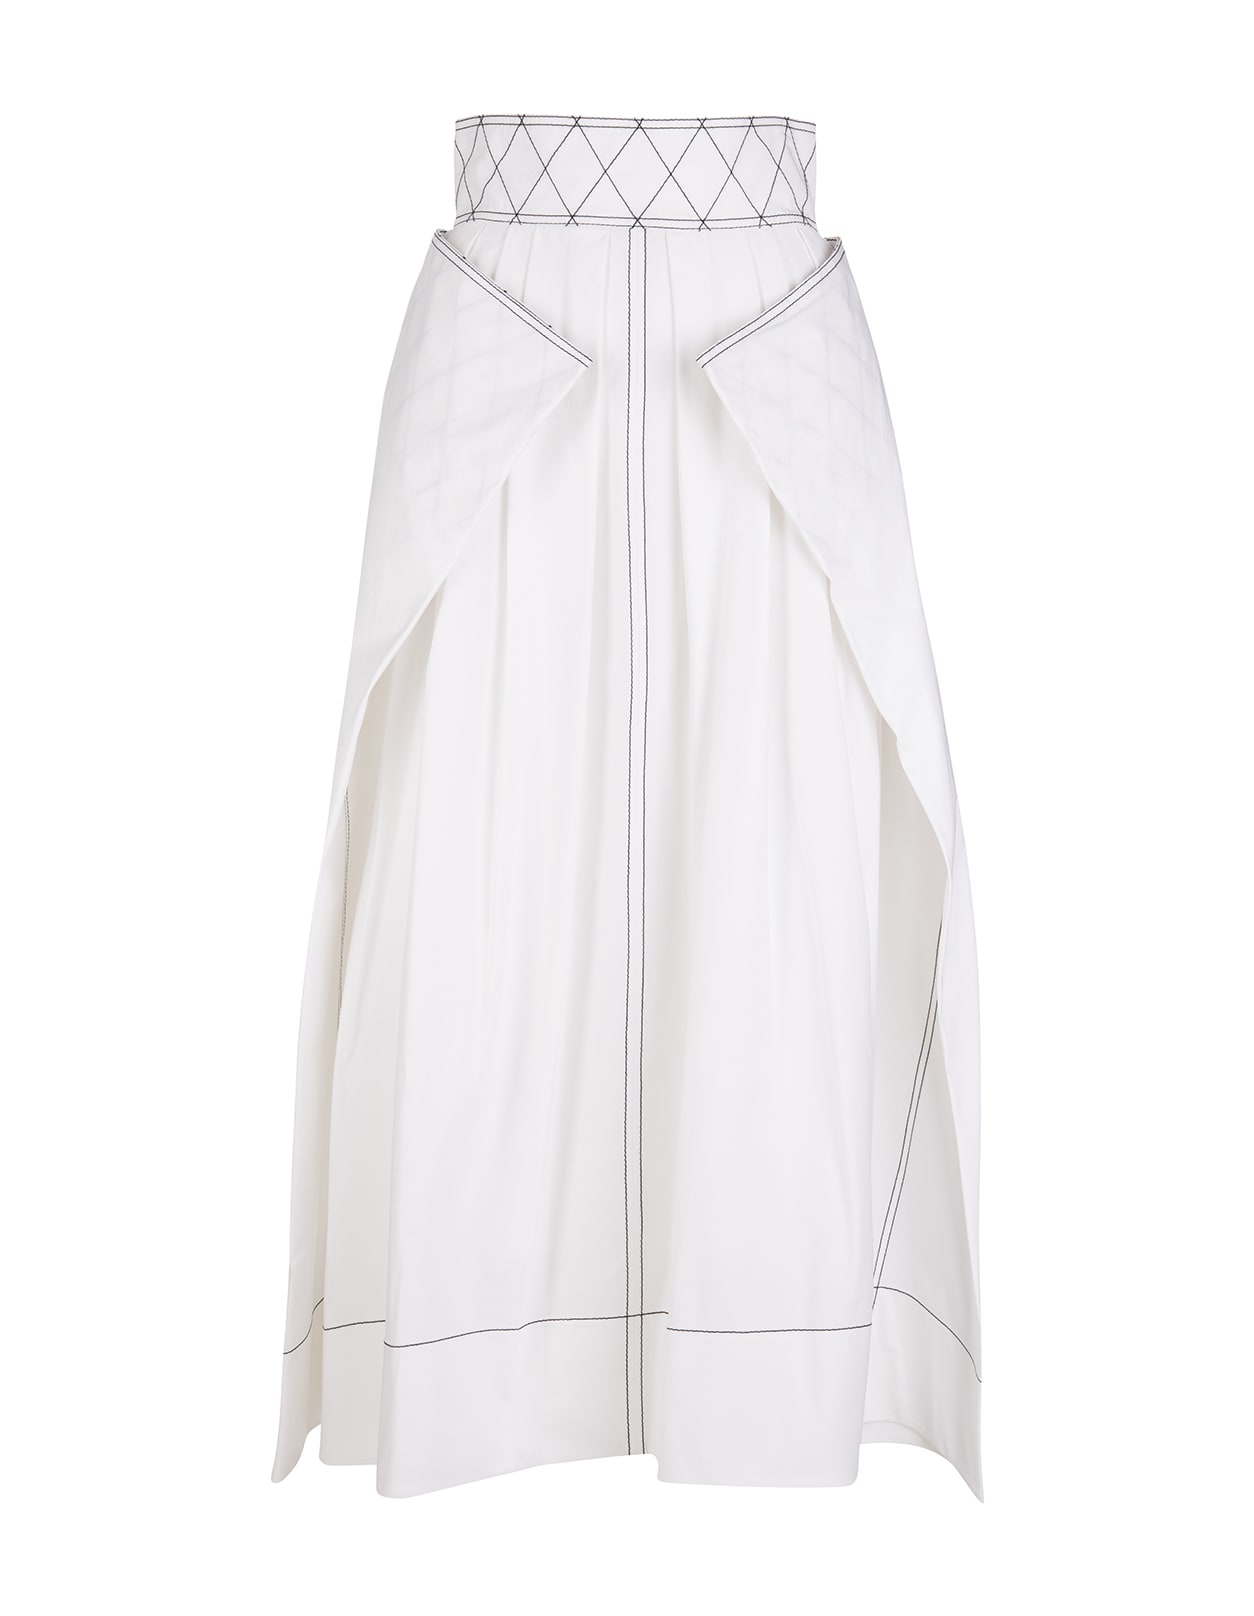 Tory Burch Long White Cotton Poplin Skirt With Diamond Stitching